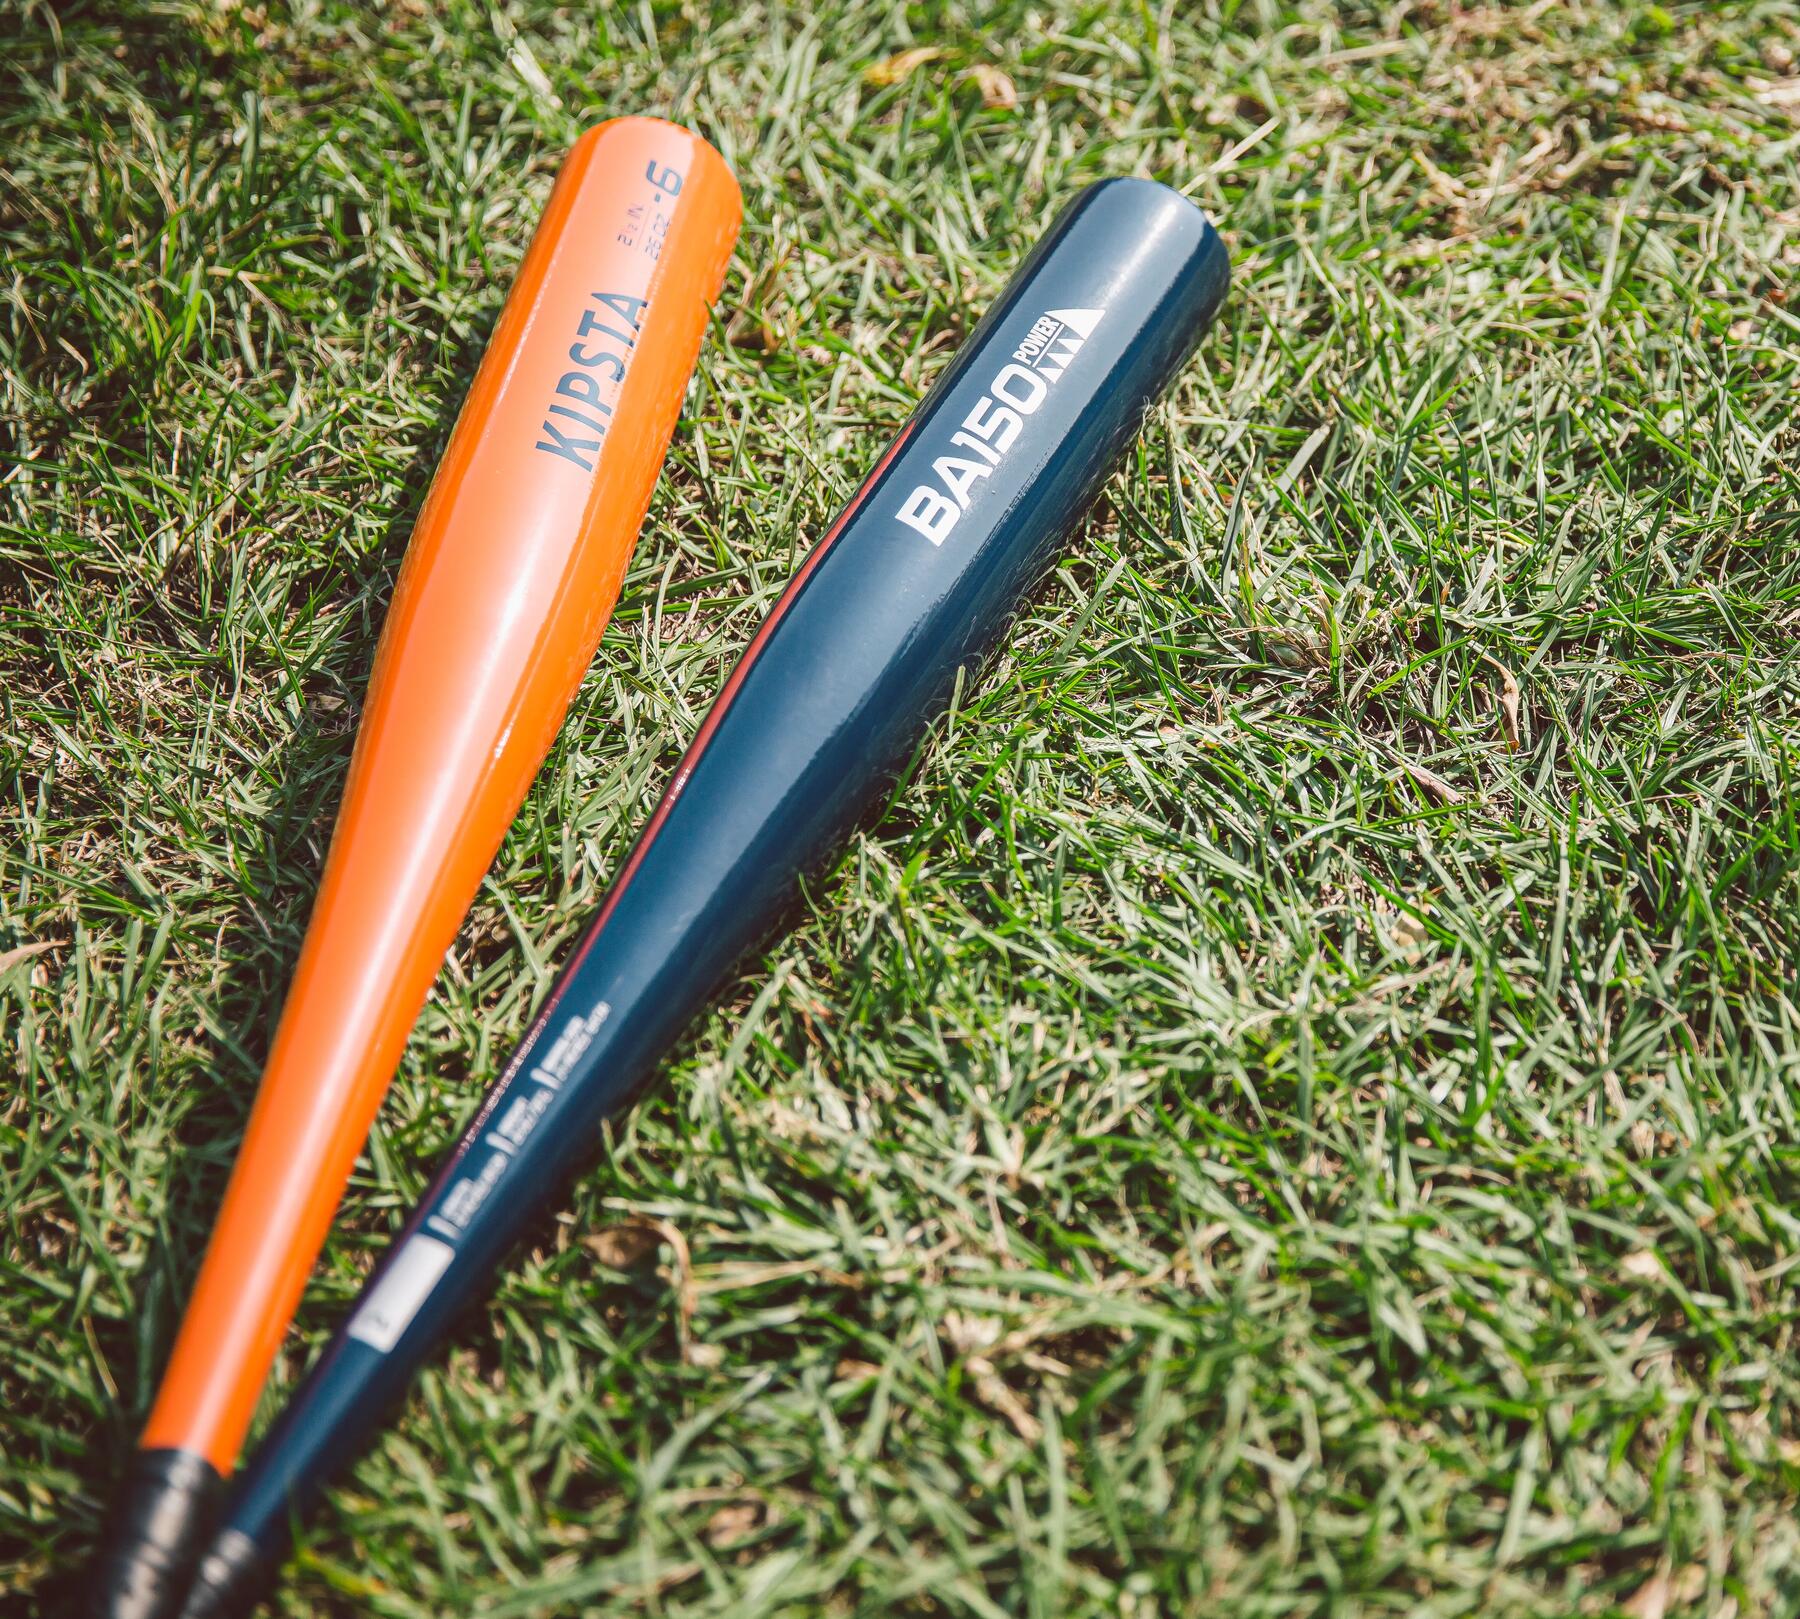 two baseball bats on the grass